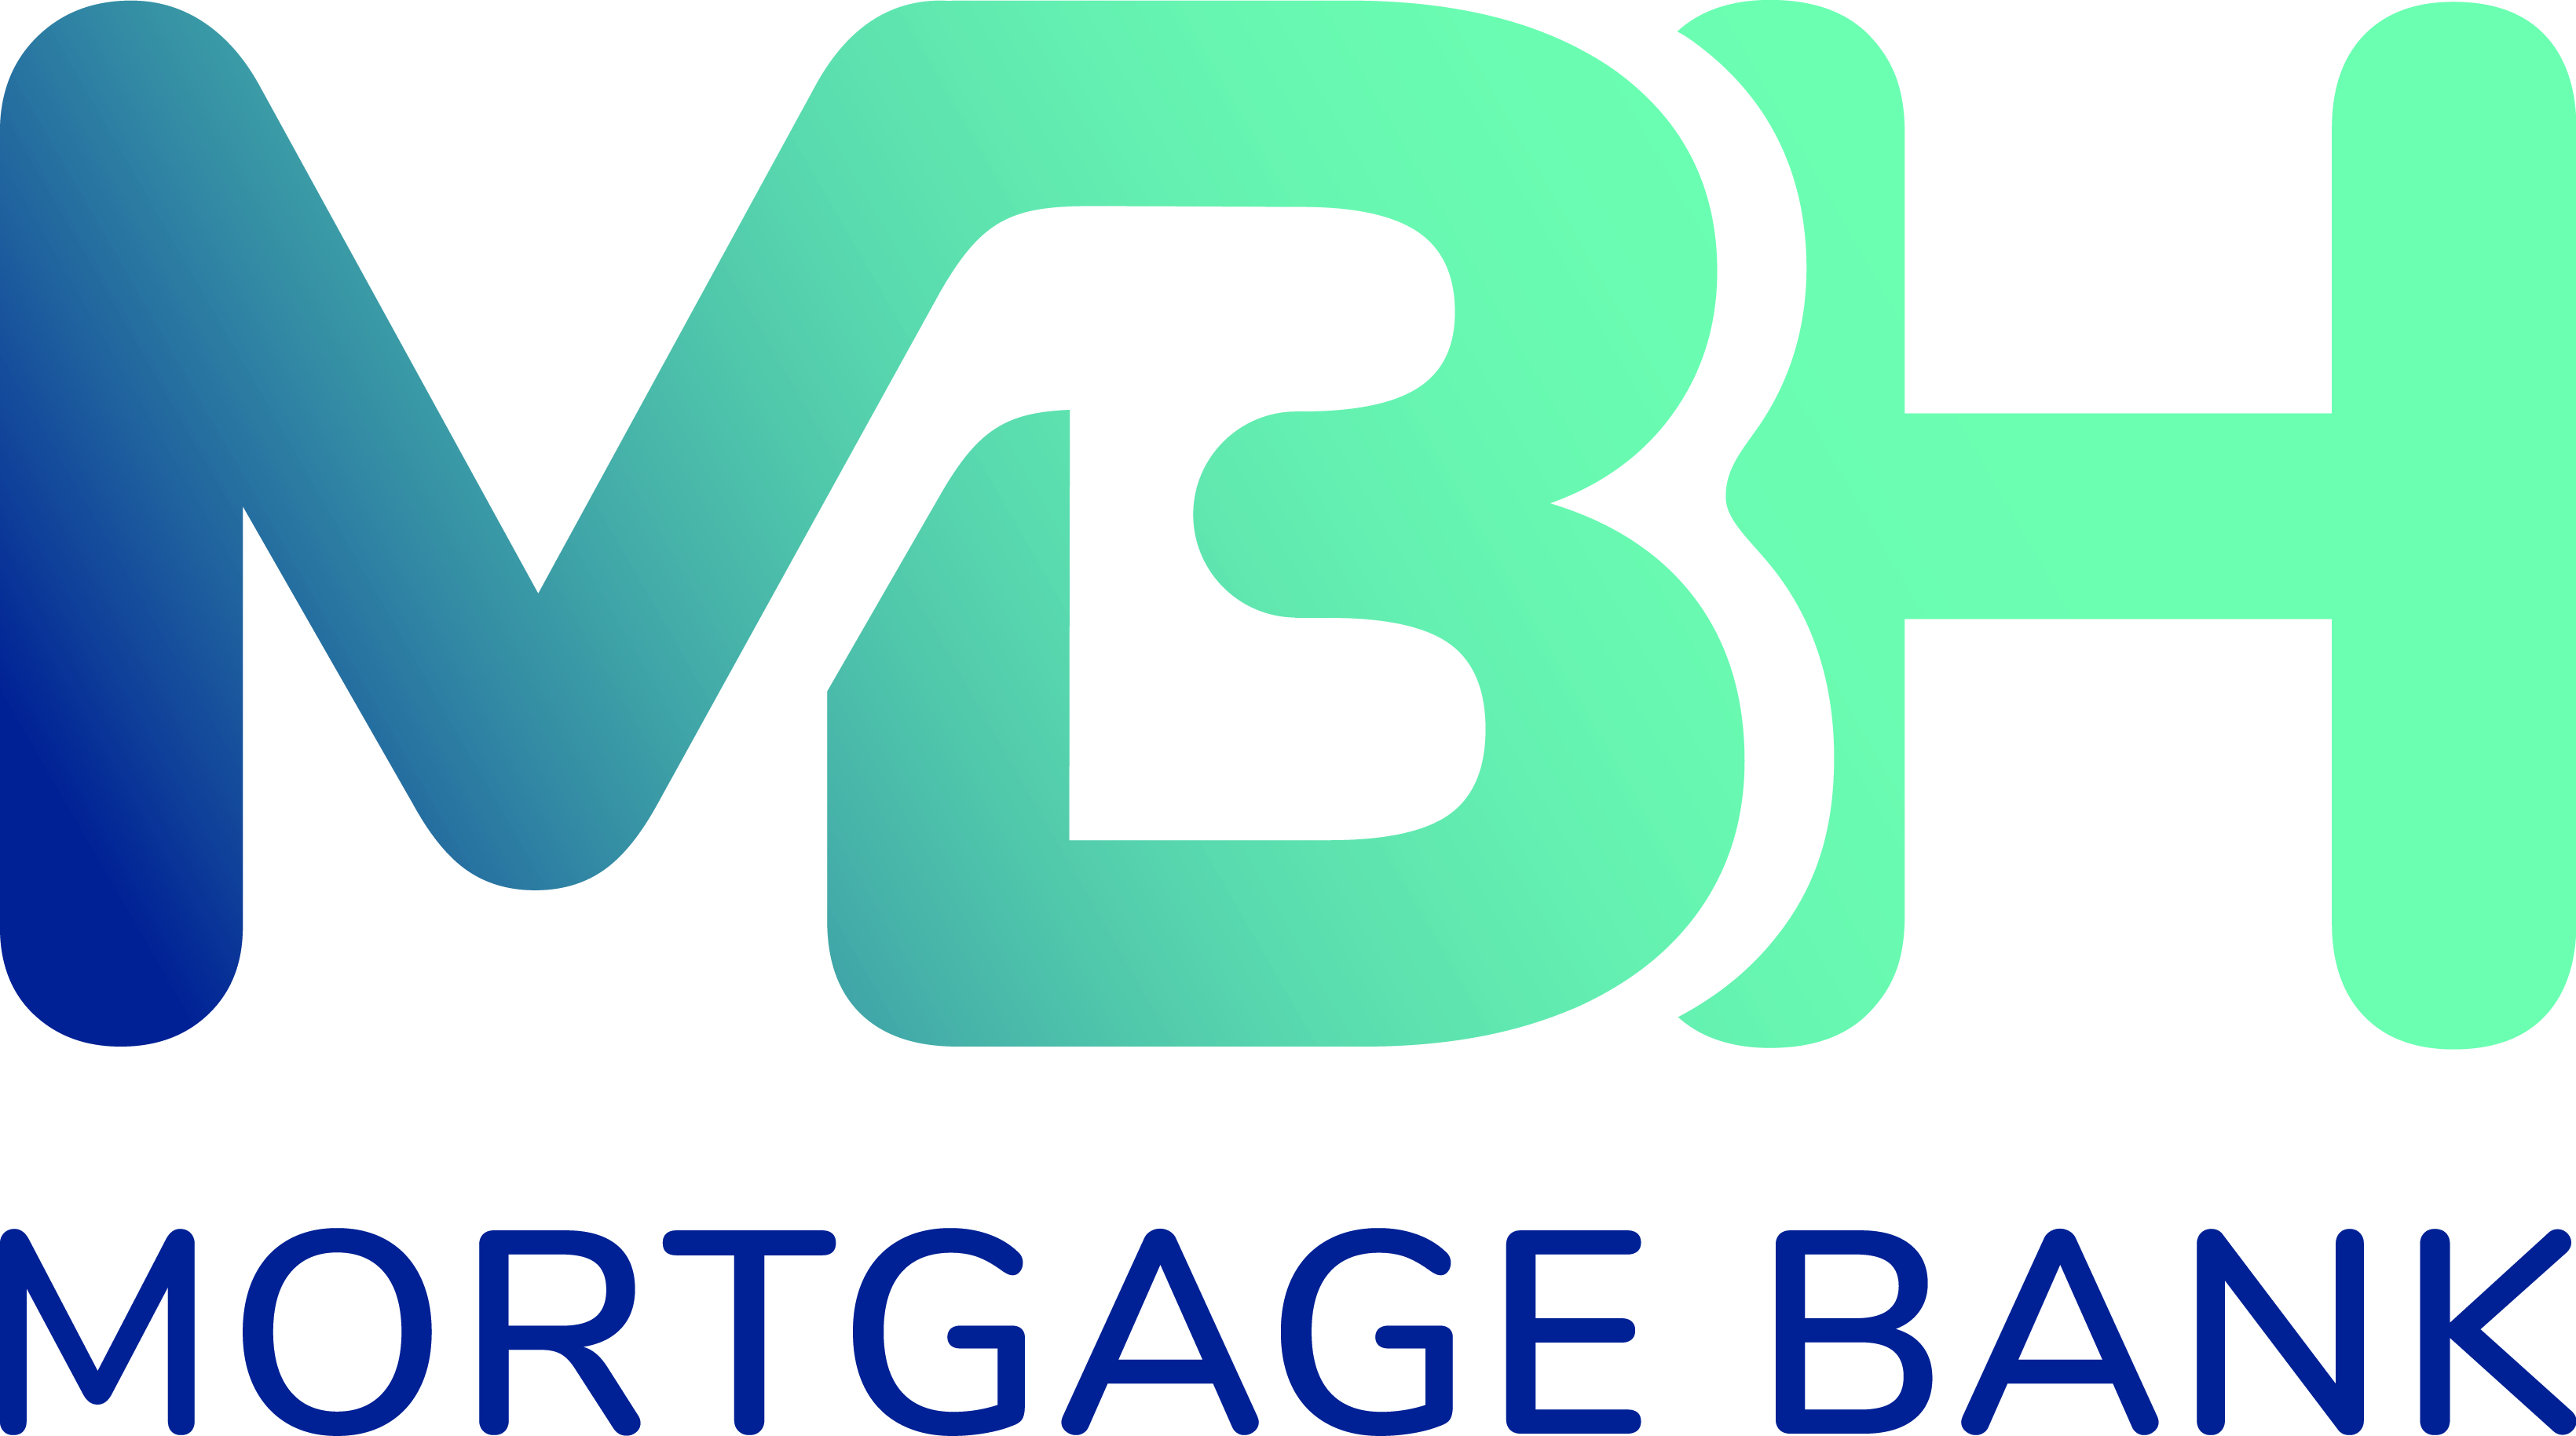 MBH_portrait_mortgage_bank_CMYK.jpg